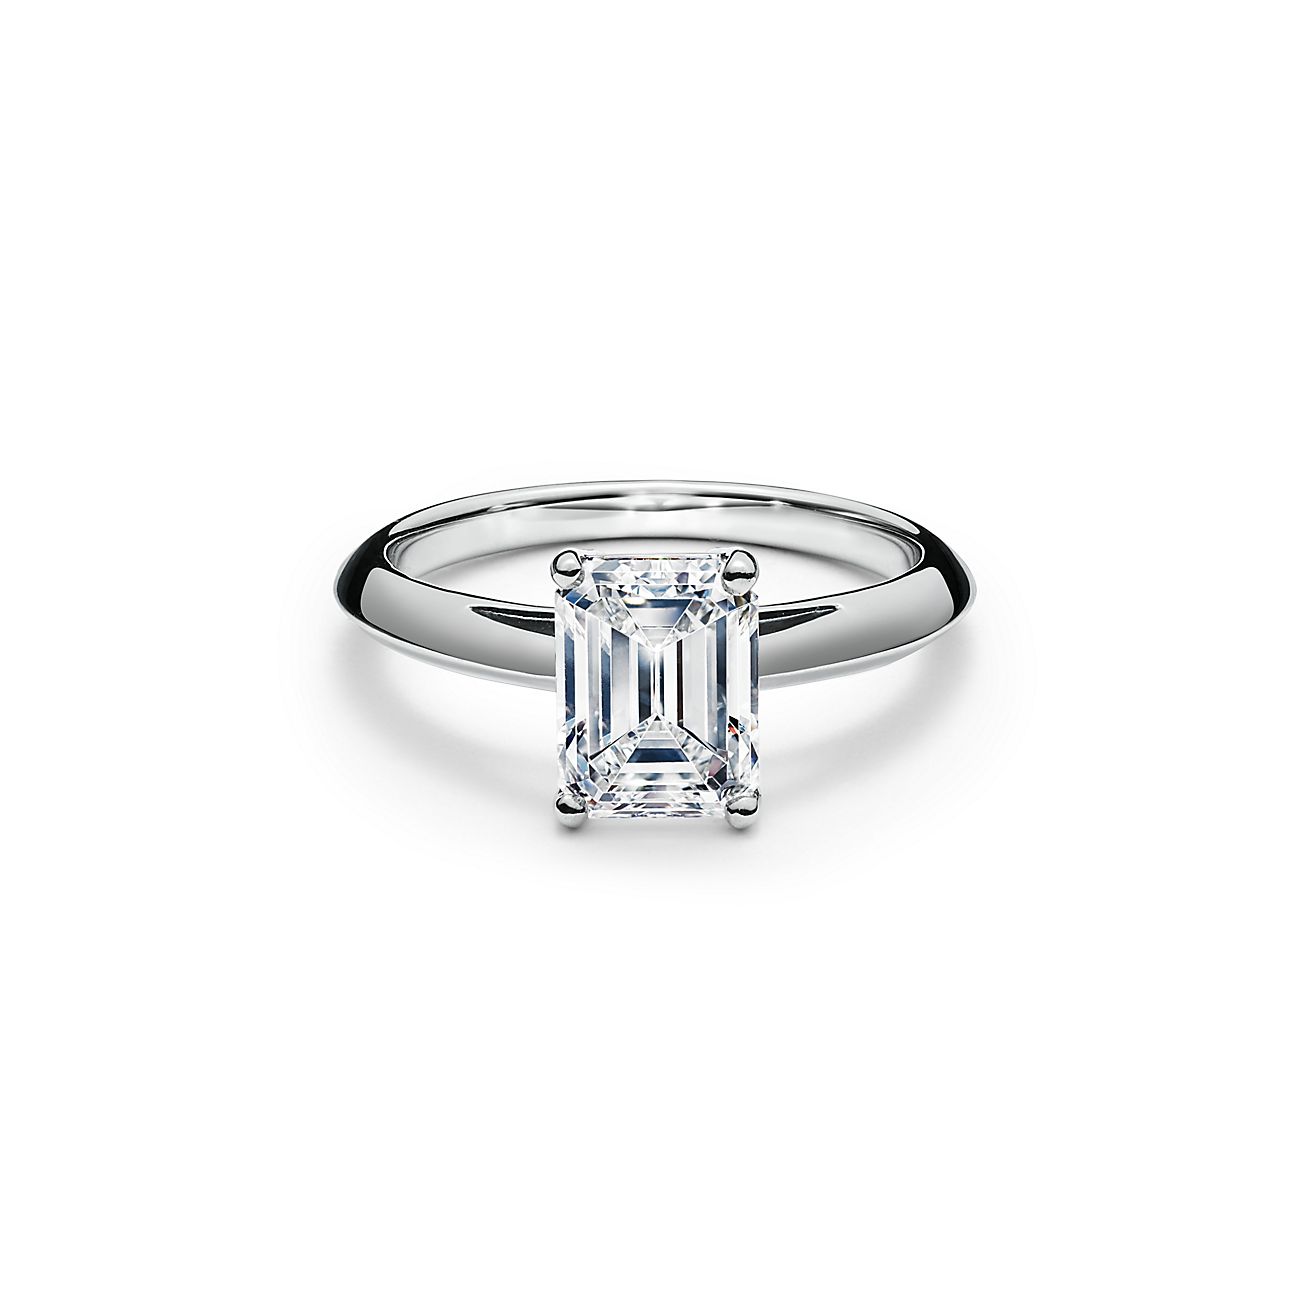 Emerald-cut diamond engagement ring in 